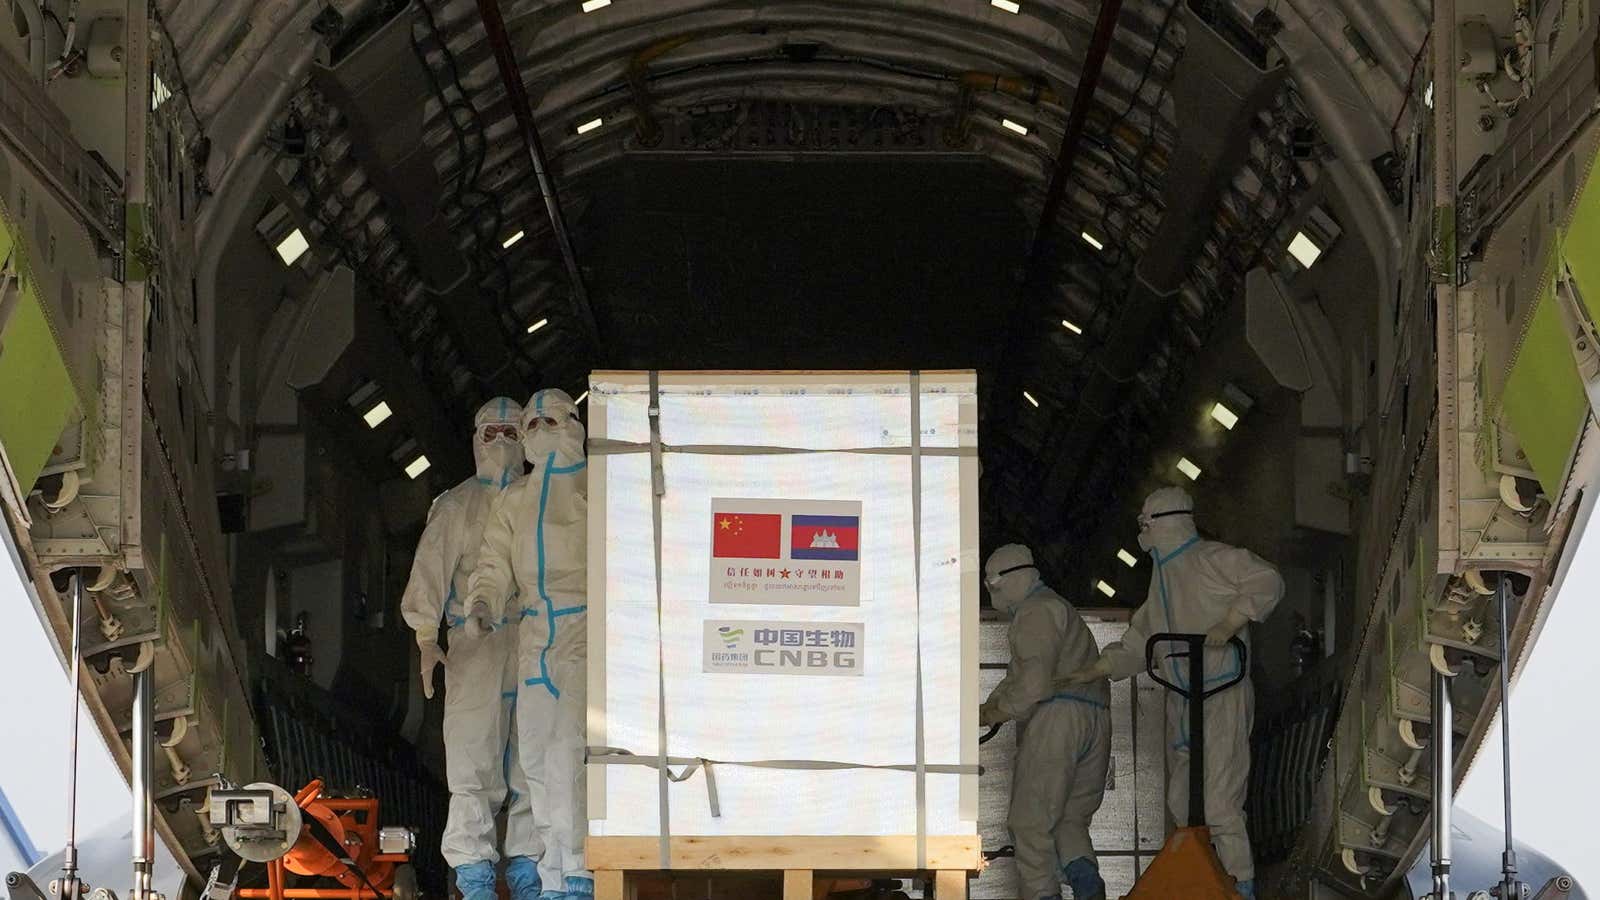 A shipment of 600,000 doses of COVID-19 vaccines arrive in Phnom Penh, Cambodia